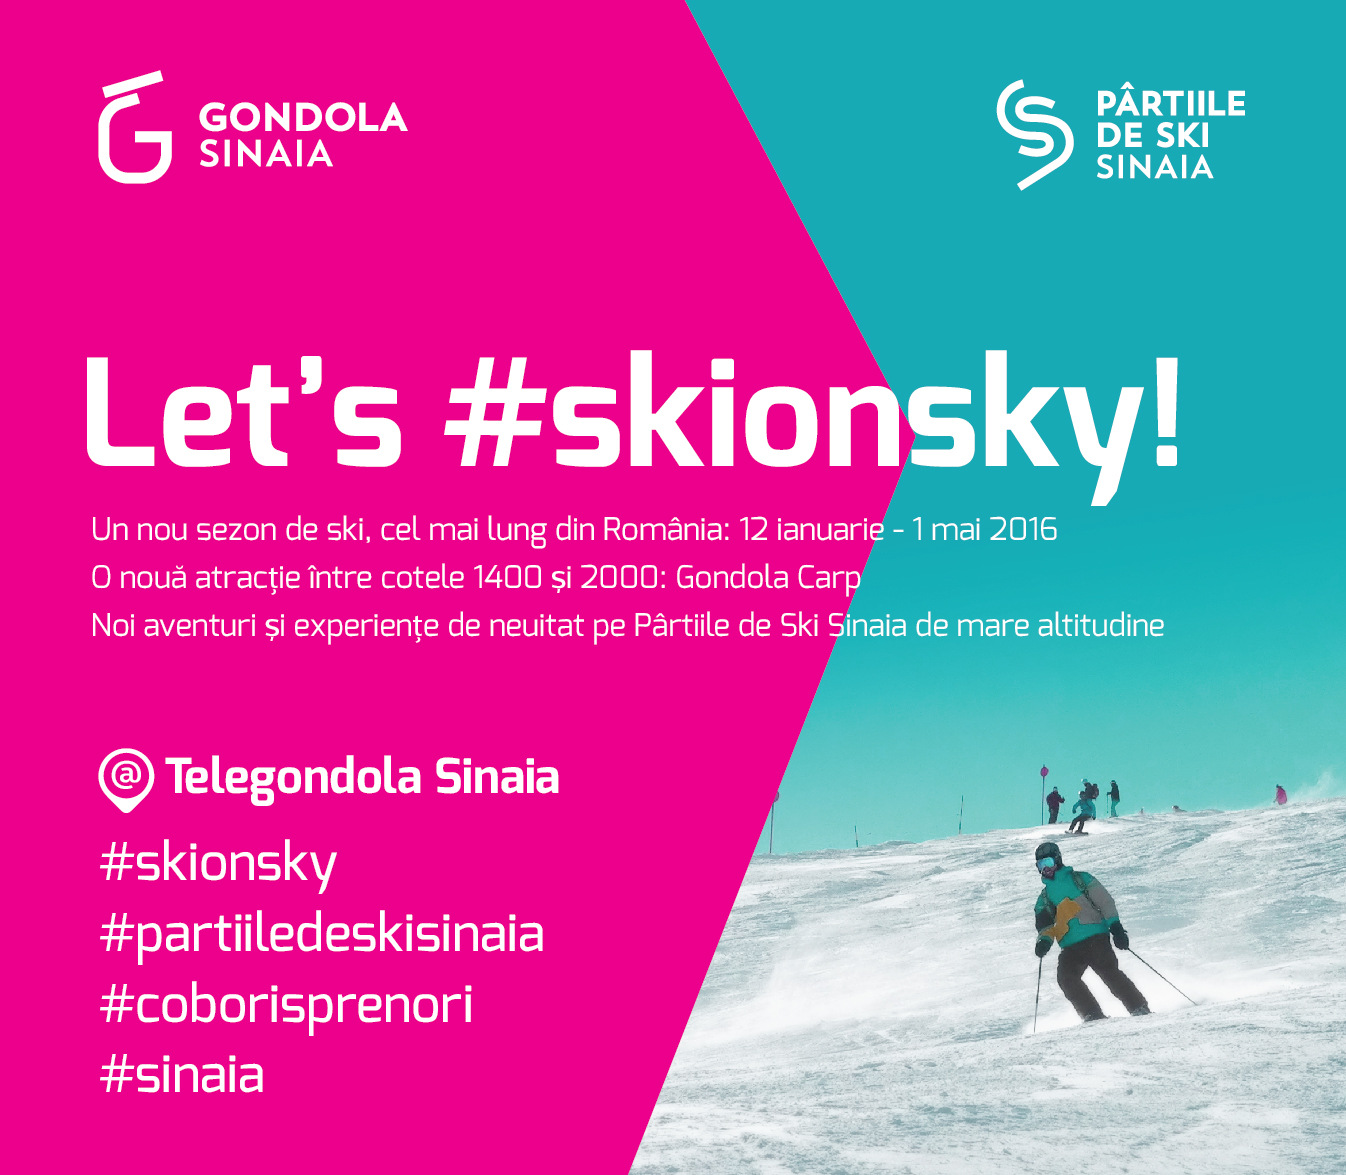  Partiile de Ski Sinaia